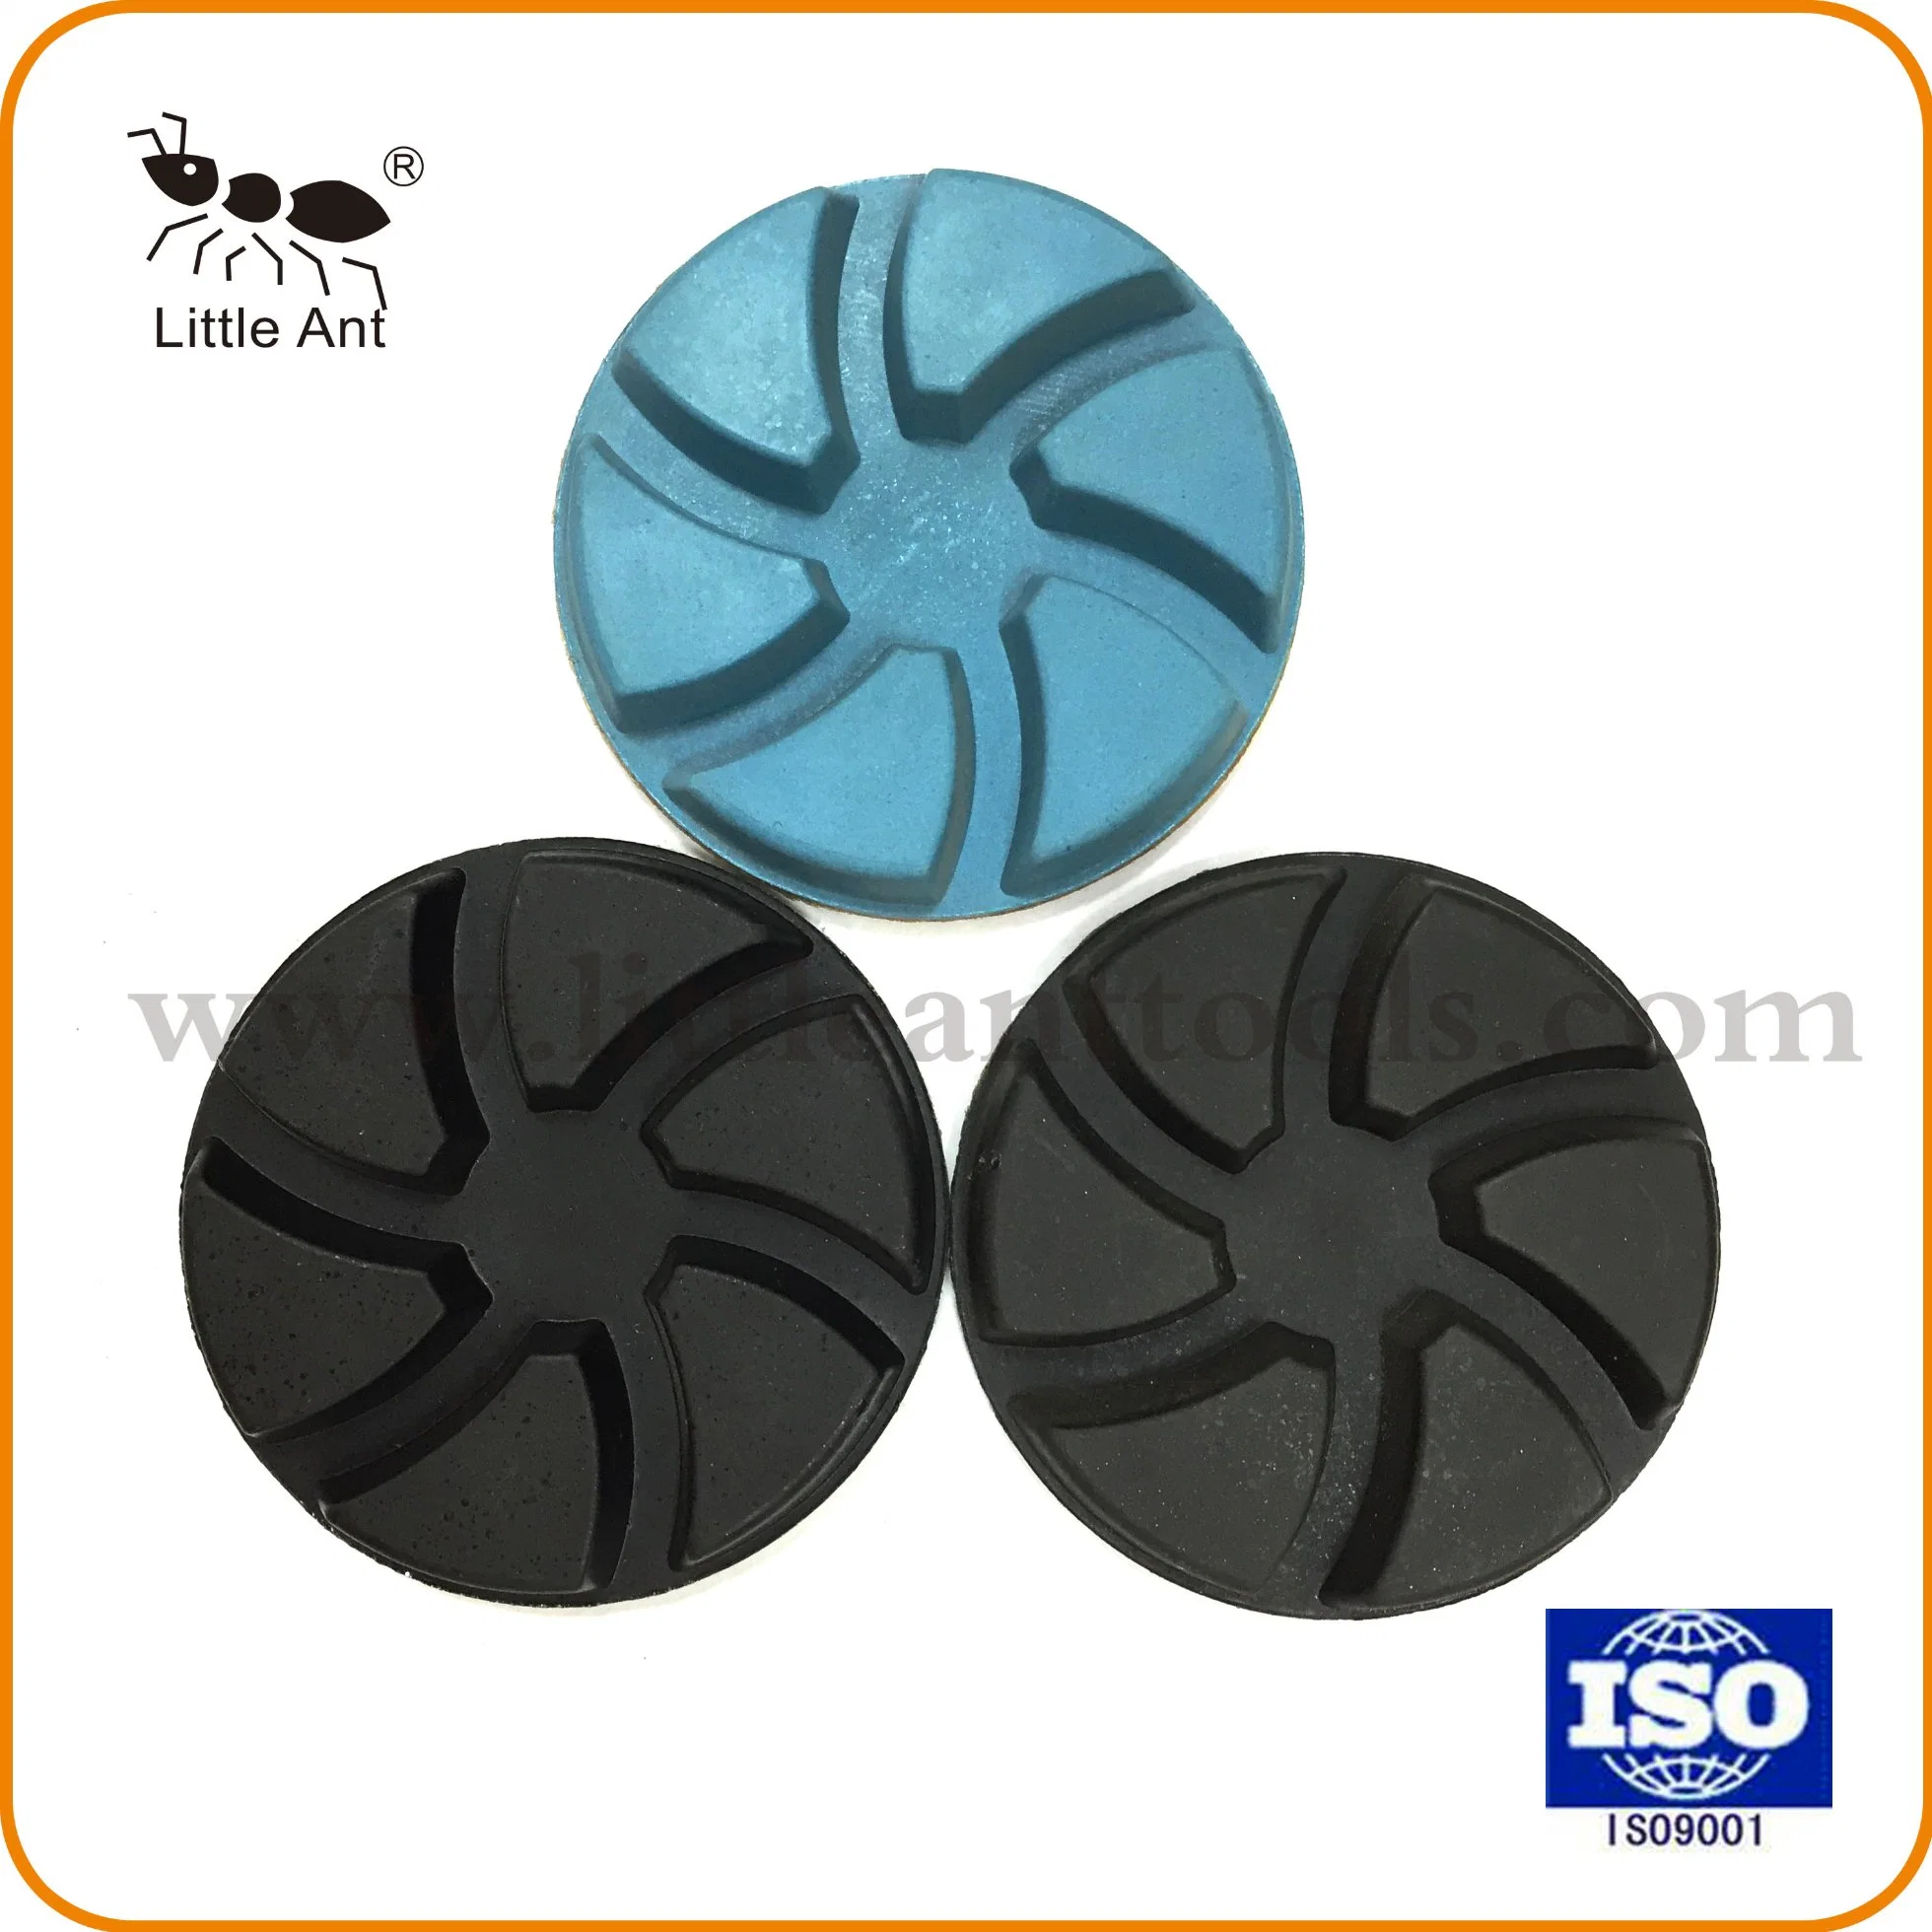 Resin Polishing Pad Super Brand Little Ant Floor Other Stone Polishing Pad Professional Abrasive Tool